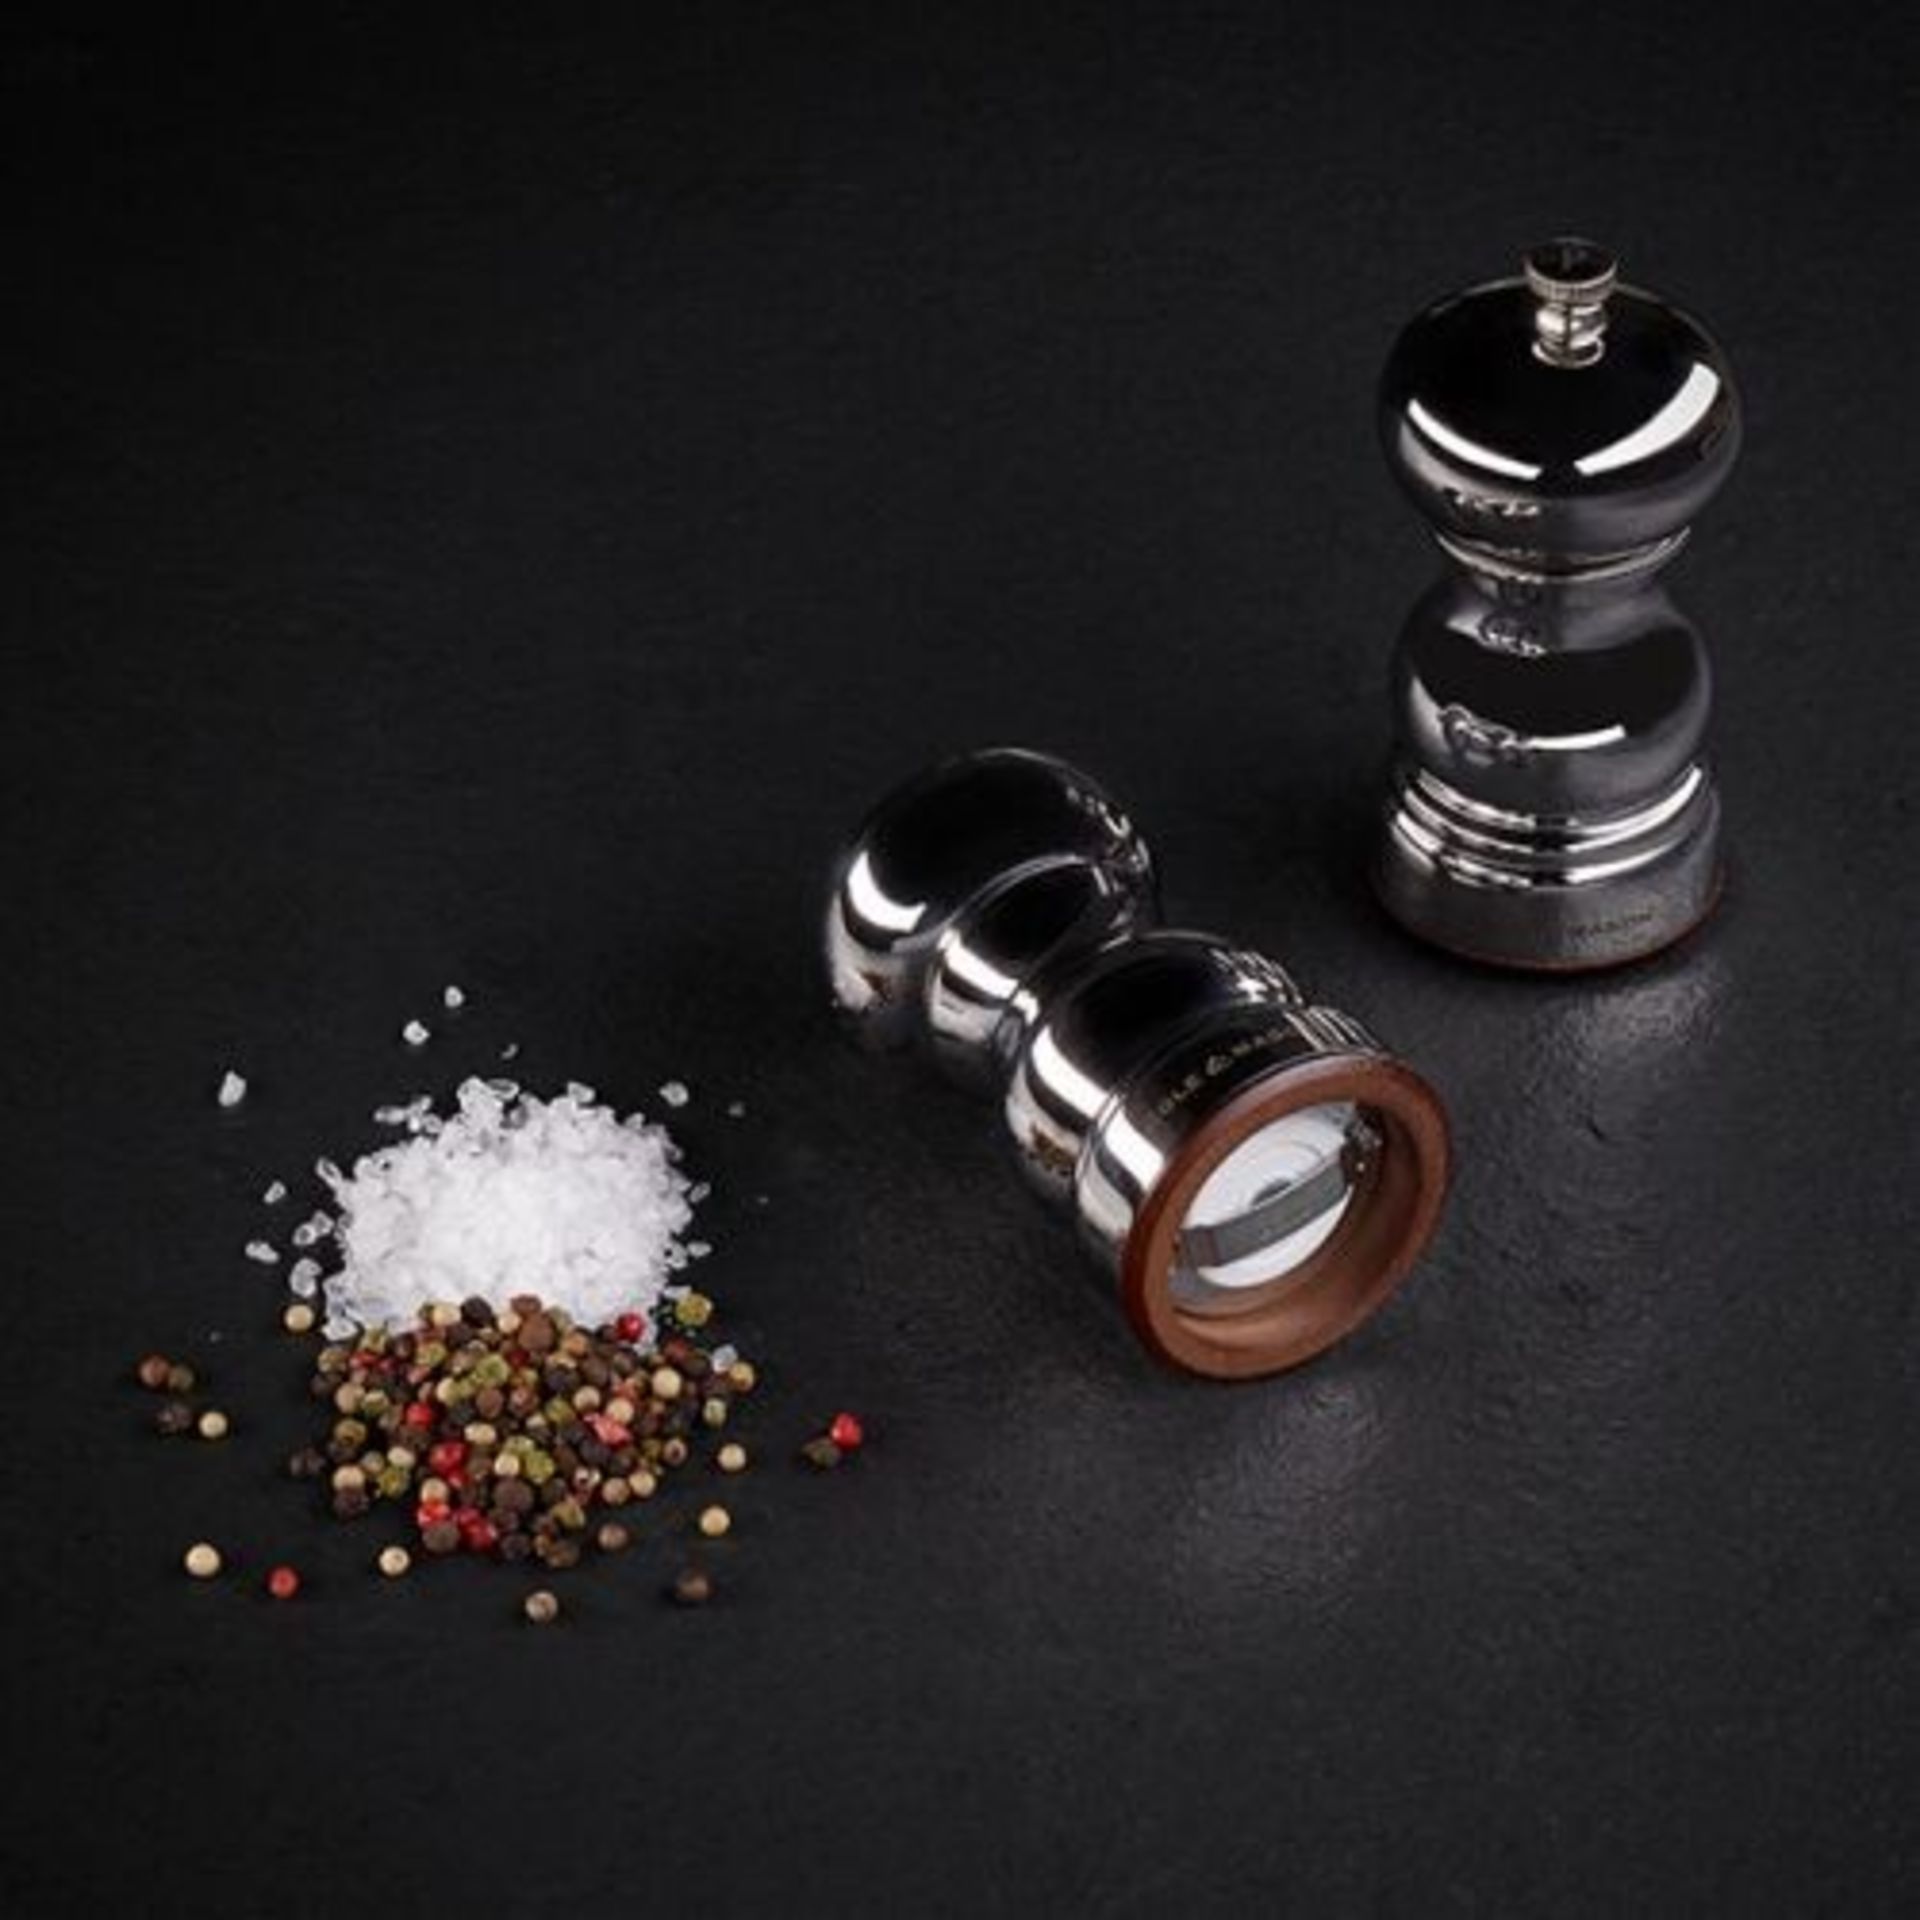 RRP £86 - New Cole & Maosn Salt & Pepper Set - Image 2 of 2